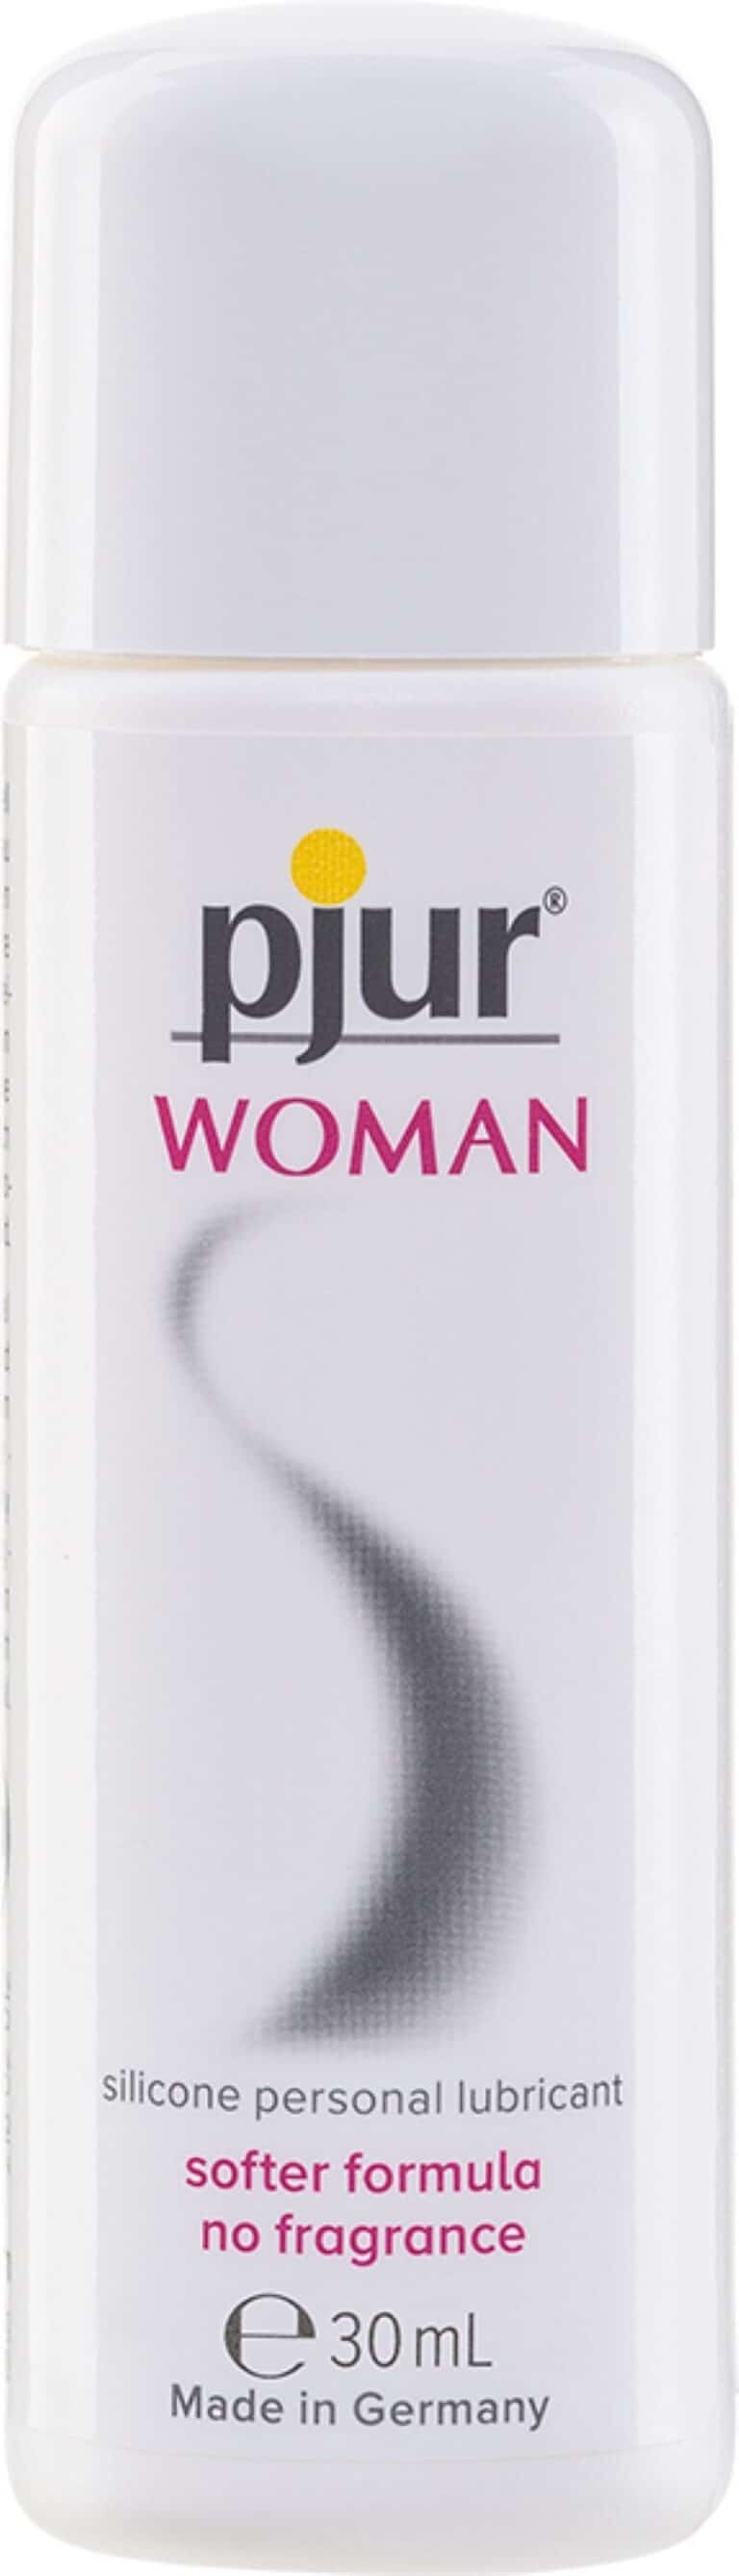 Pjur Woman Review